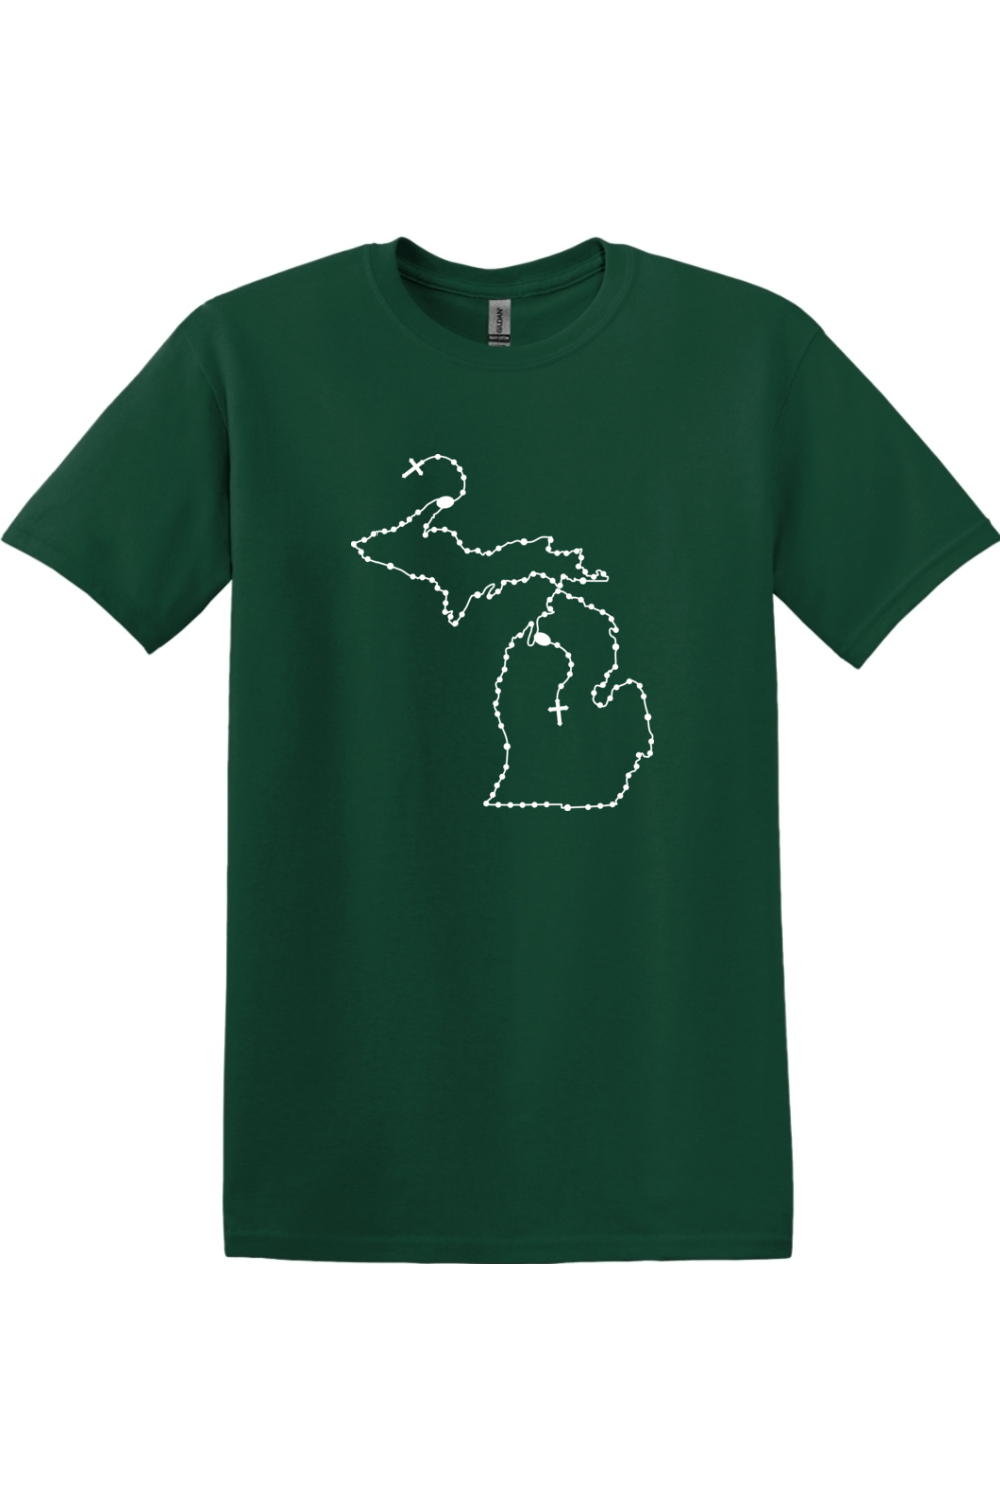 Michigan Rosary Adult T-shirt